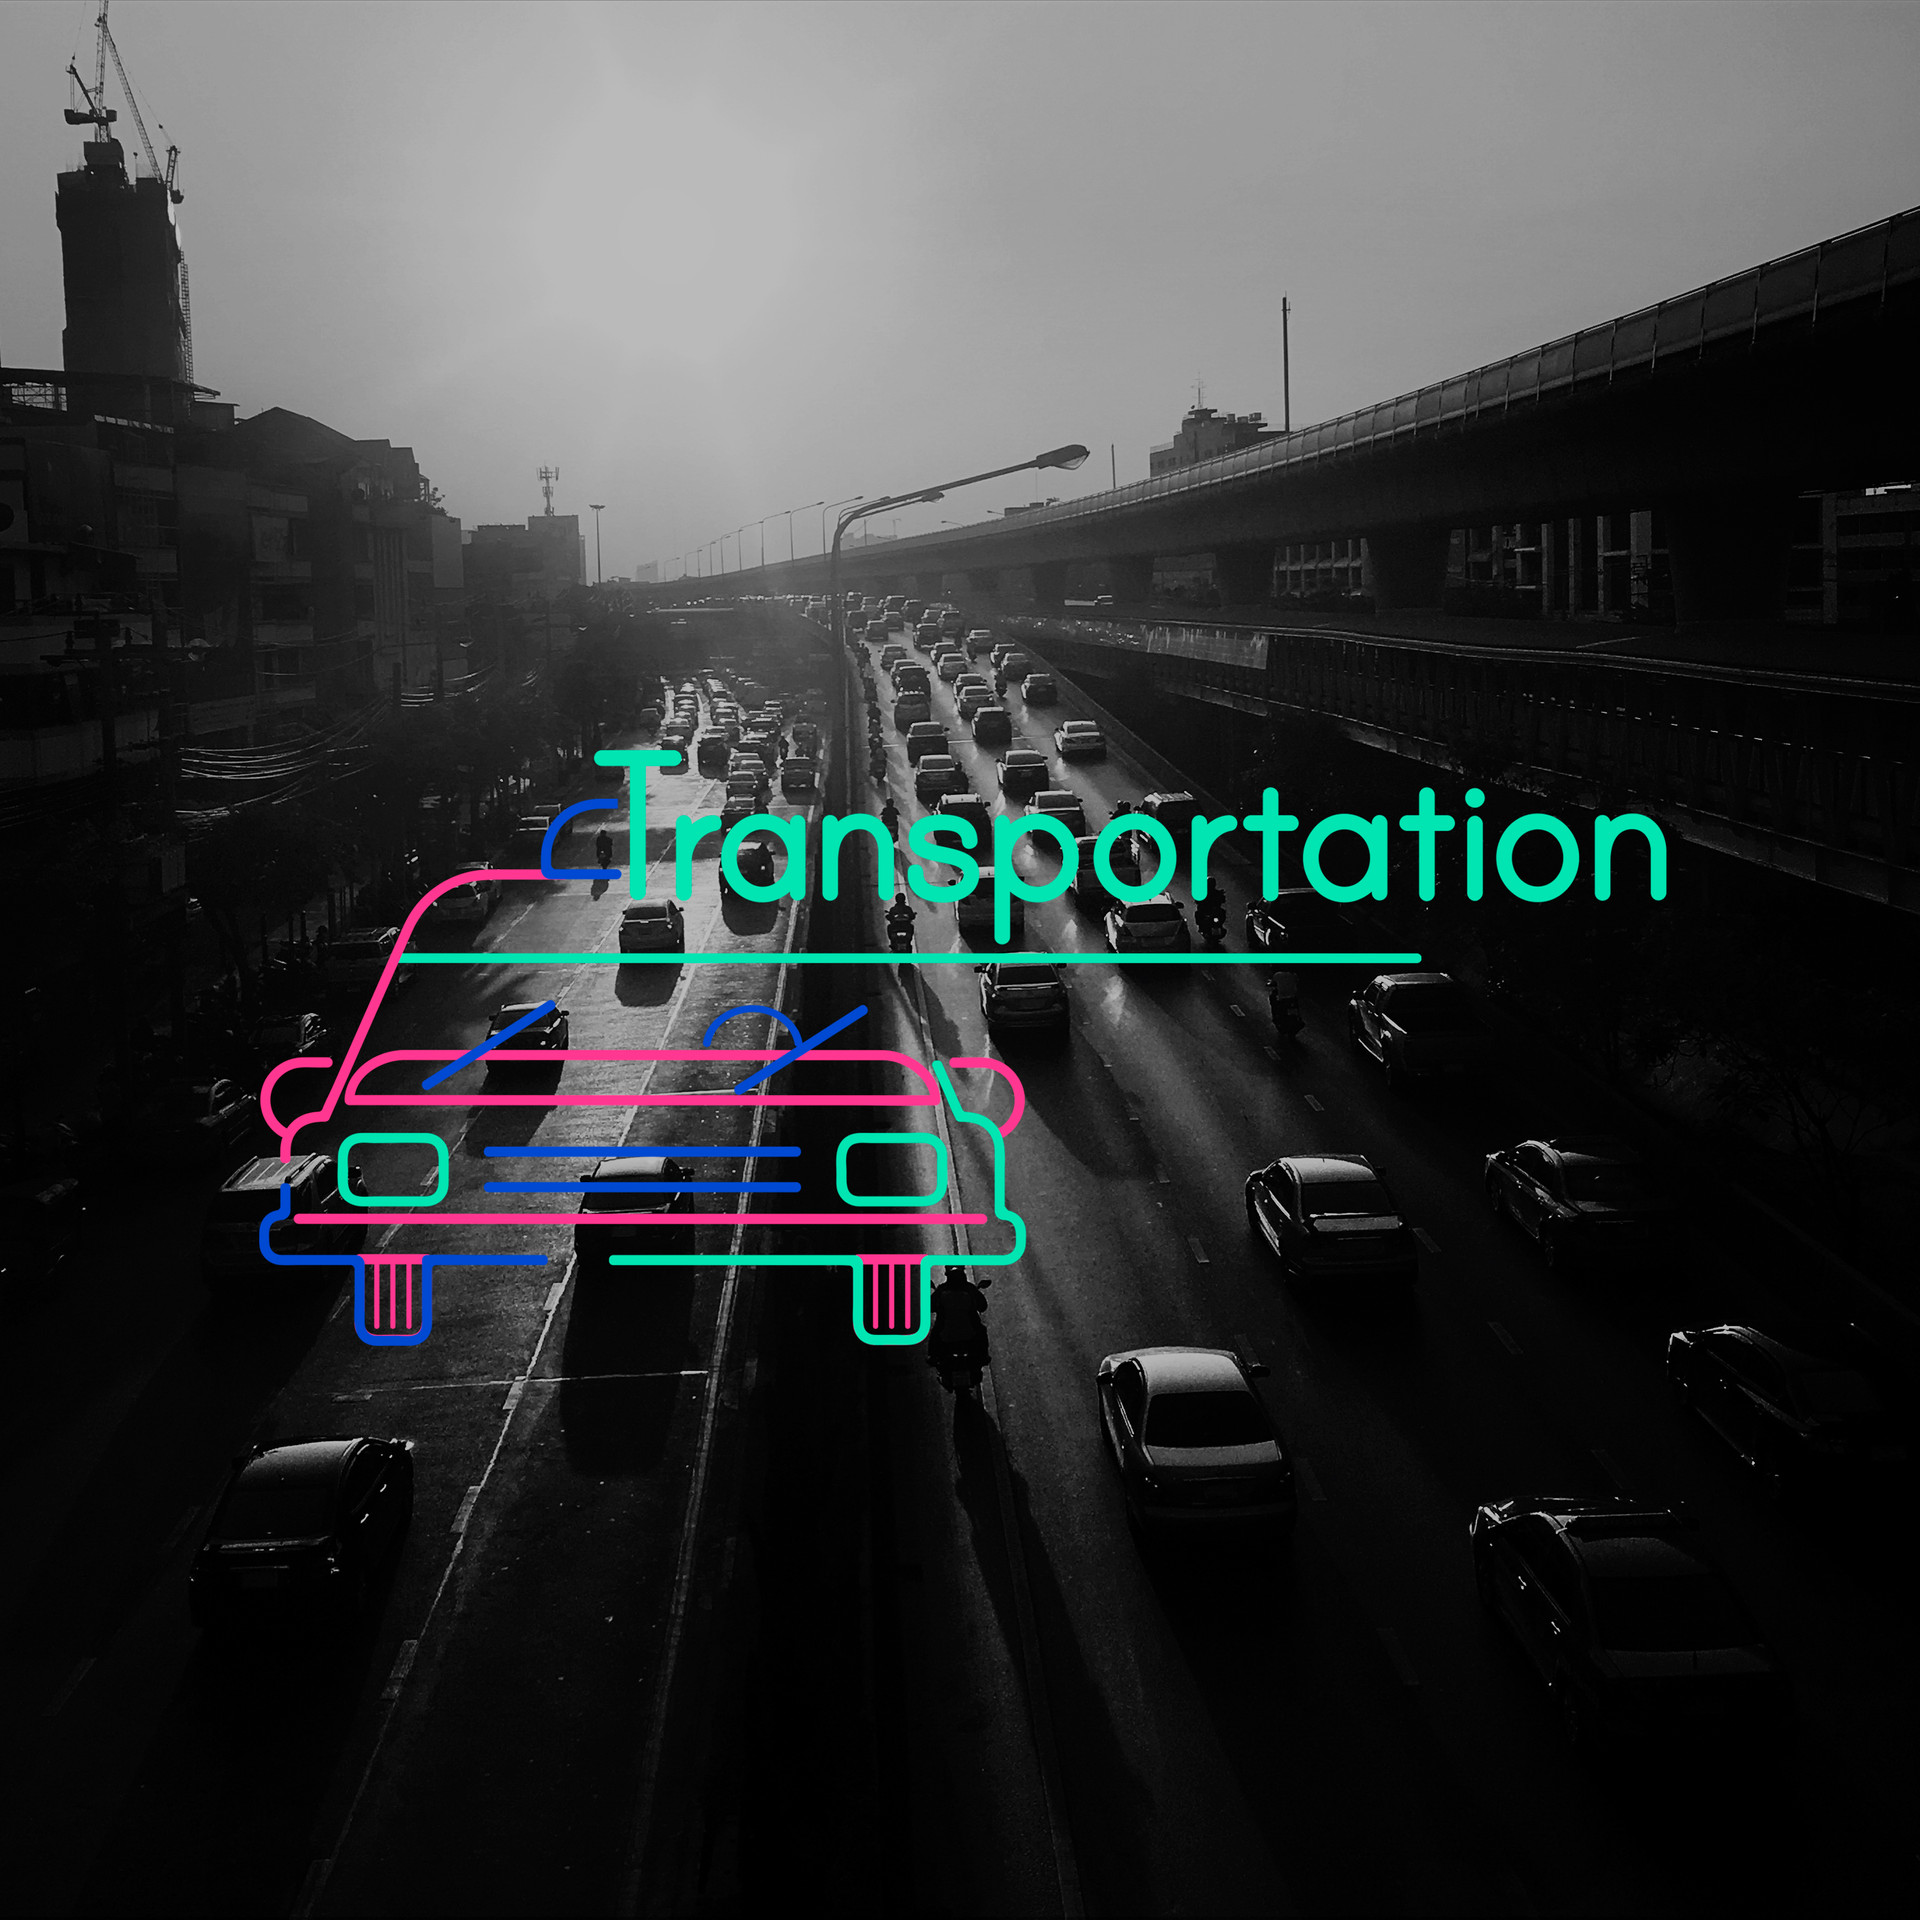 people-travel-transportation-vehicular.jpg